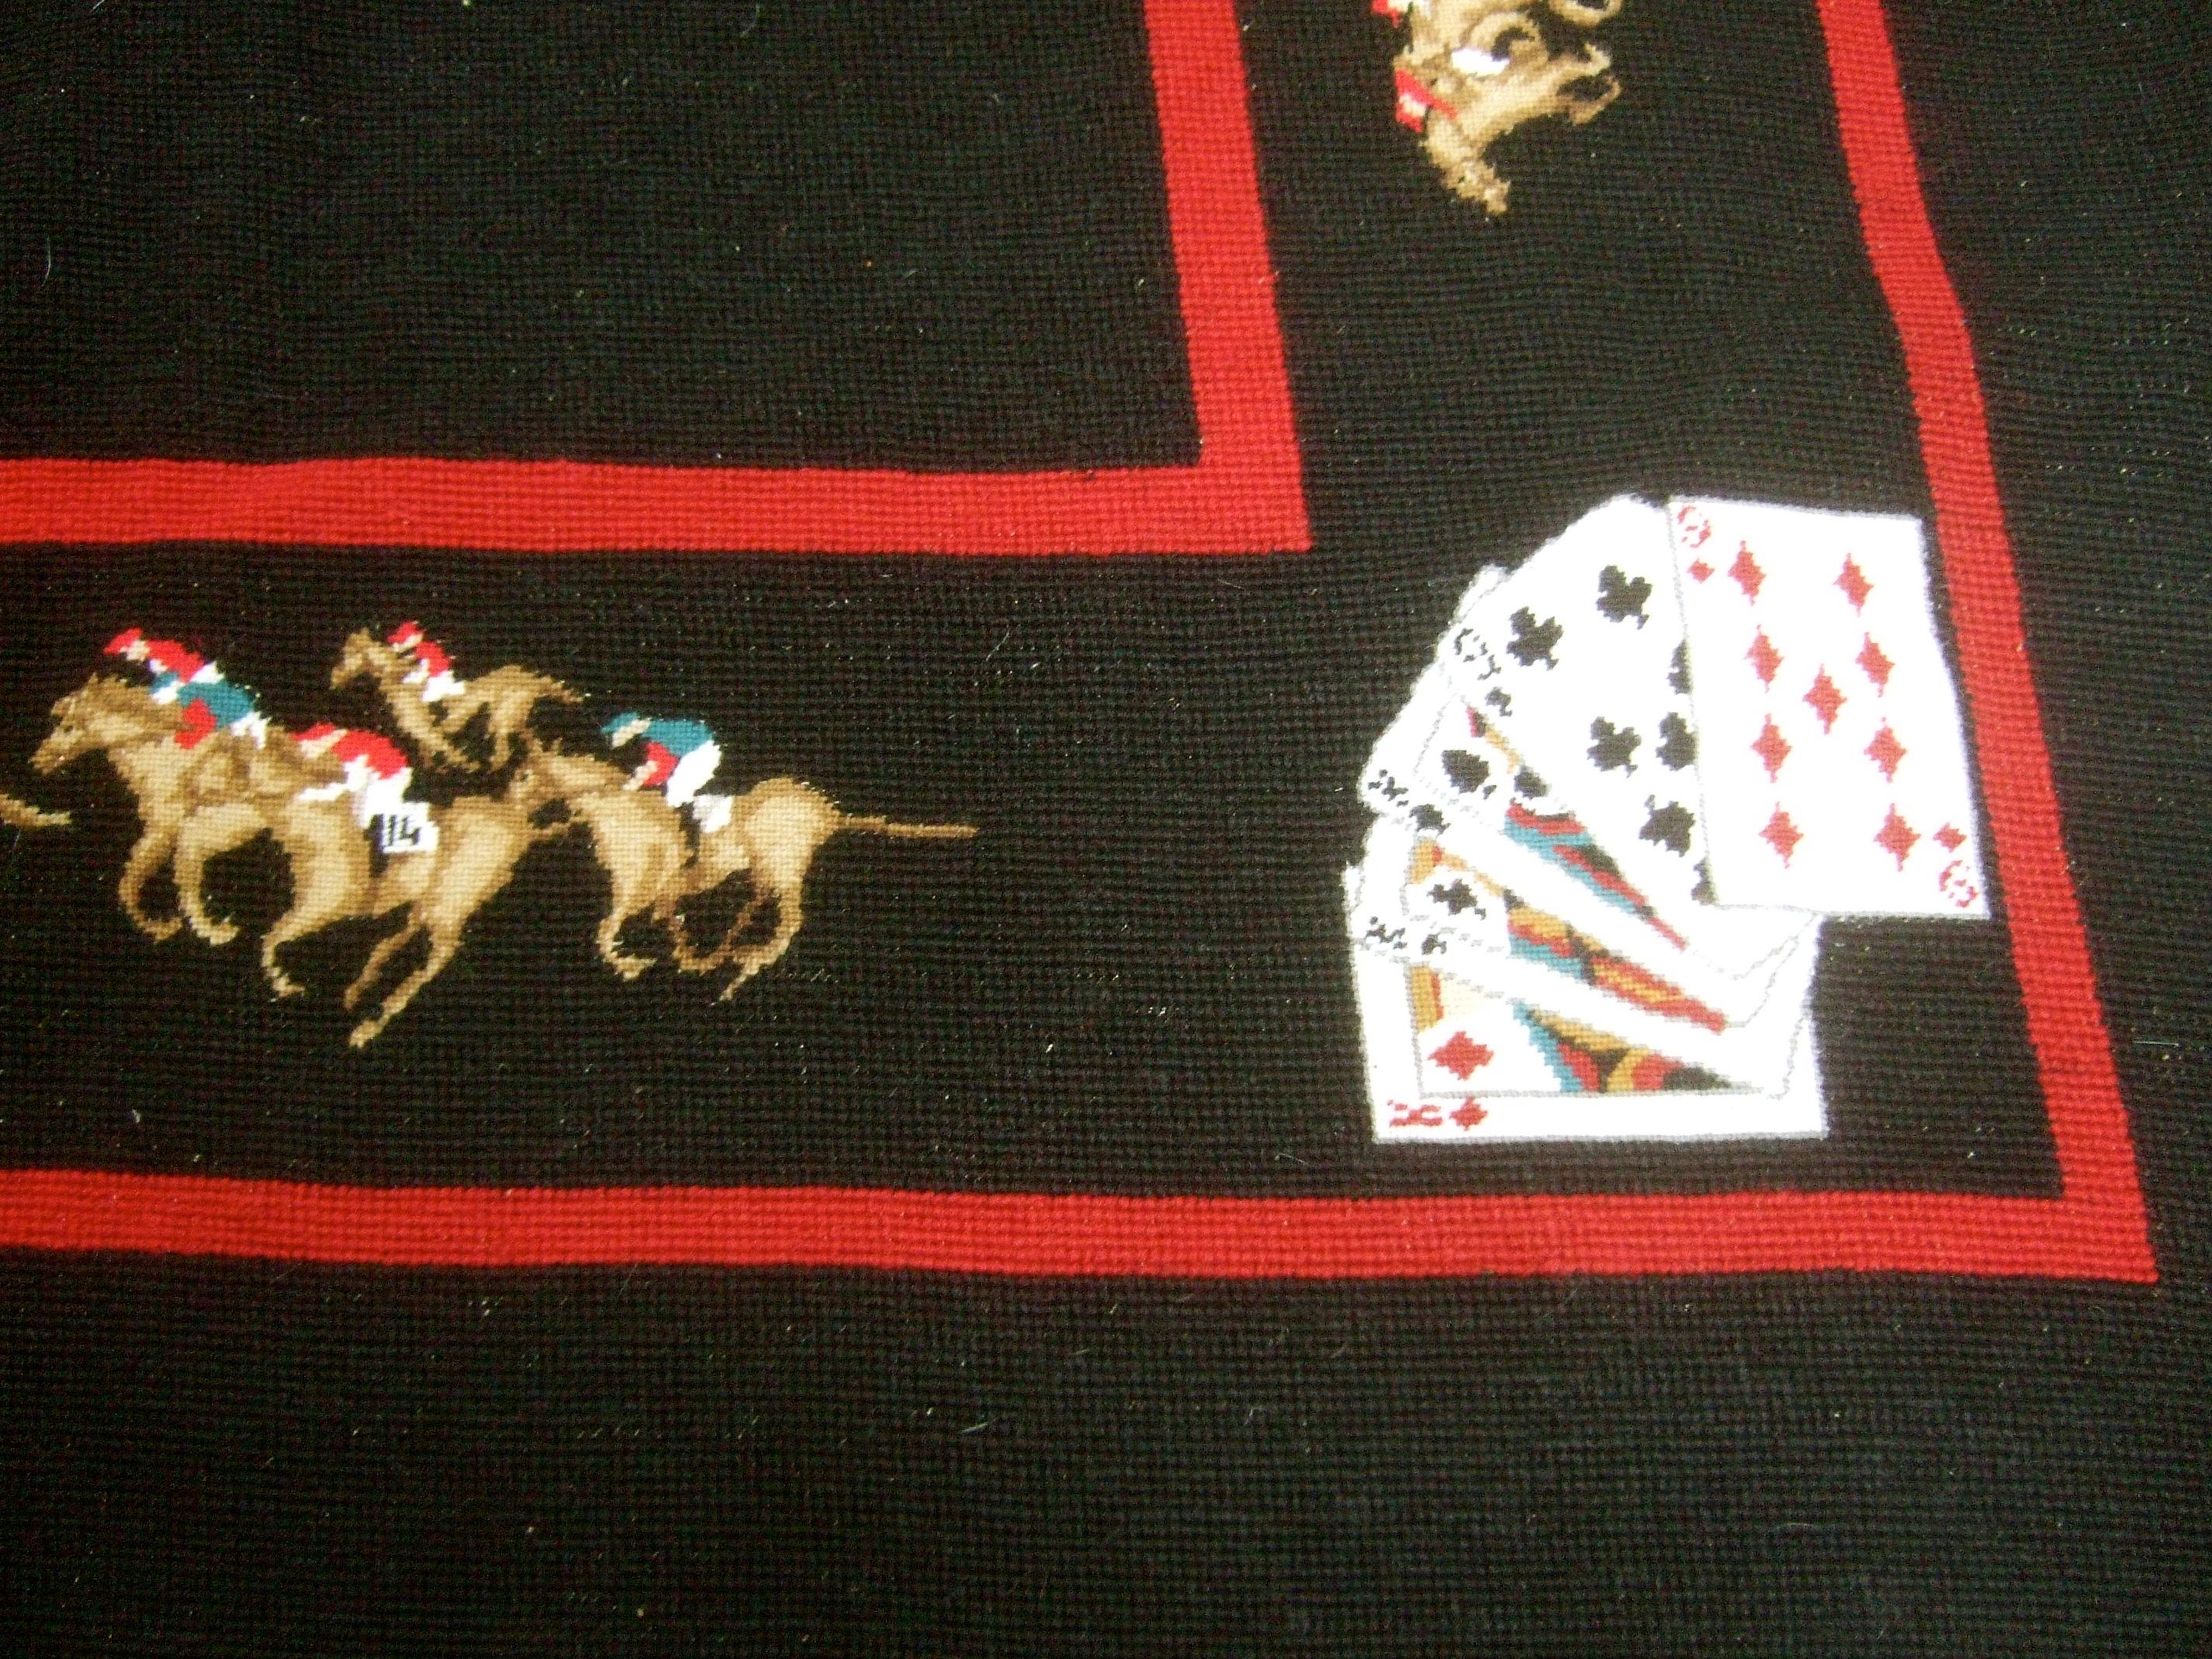 Black Exquisite Needlepoint Hand Stitched Bridge Equine Theme Table Cover circa 1980s